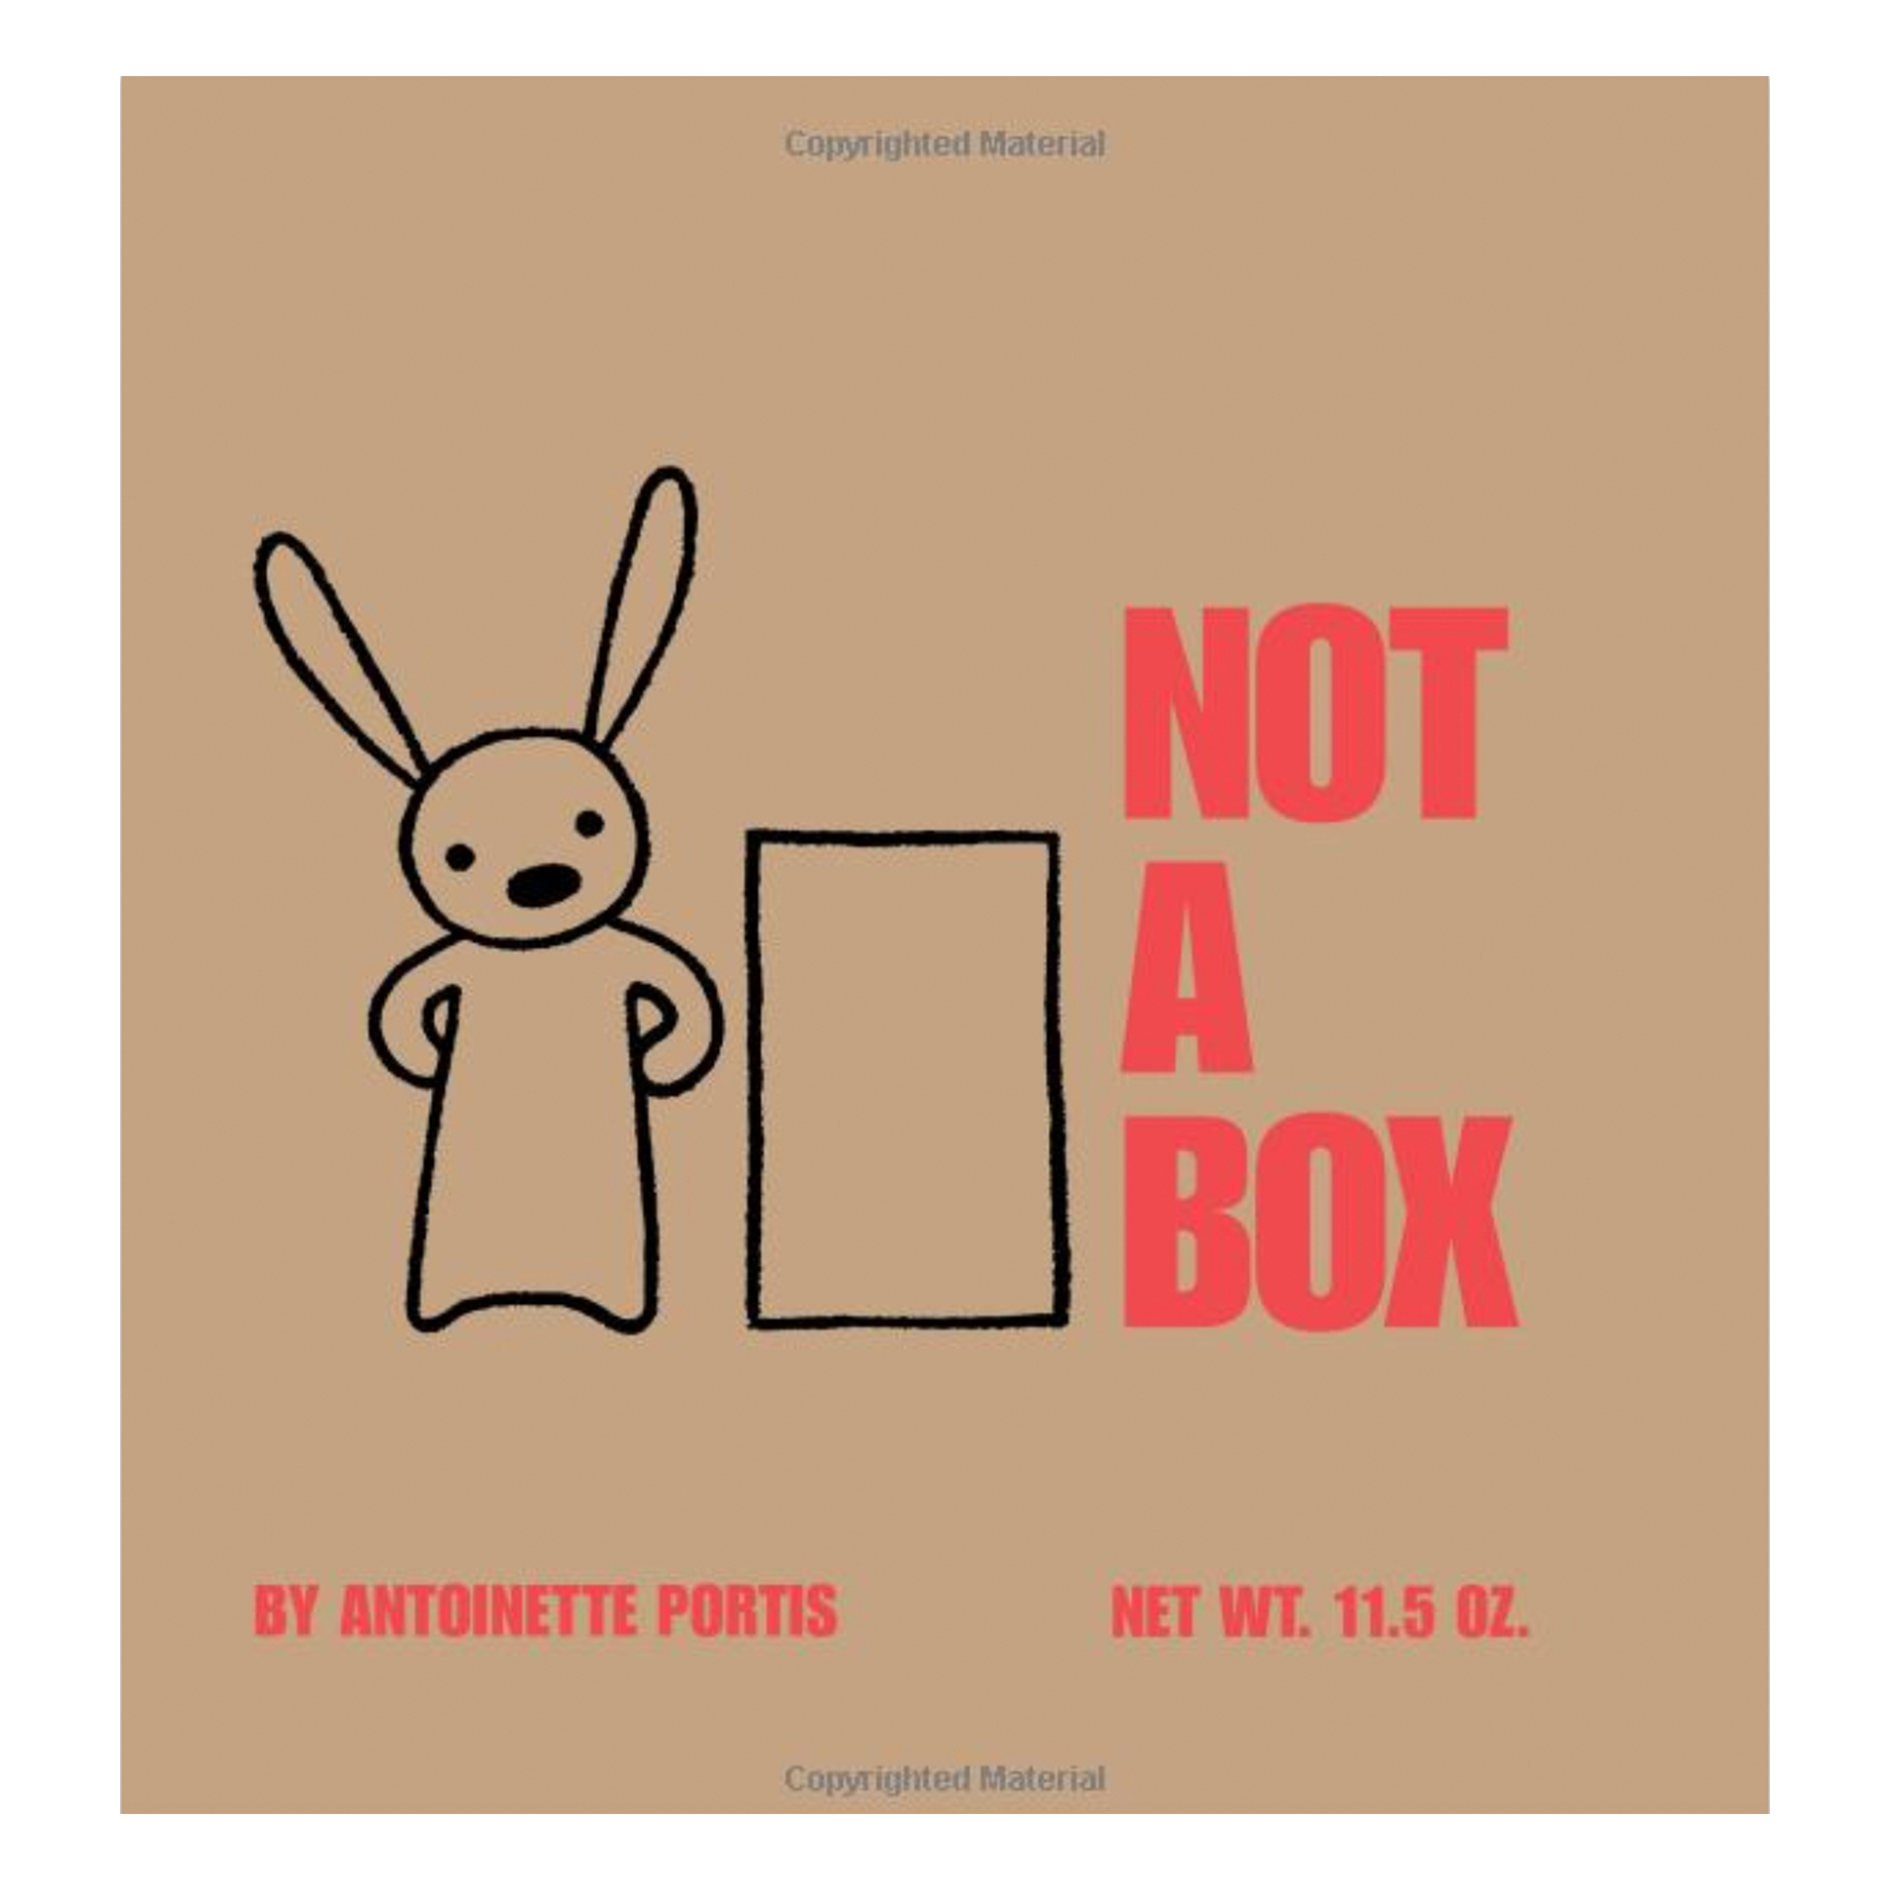 Not A Box